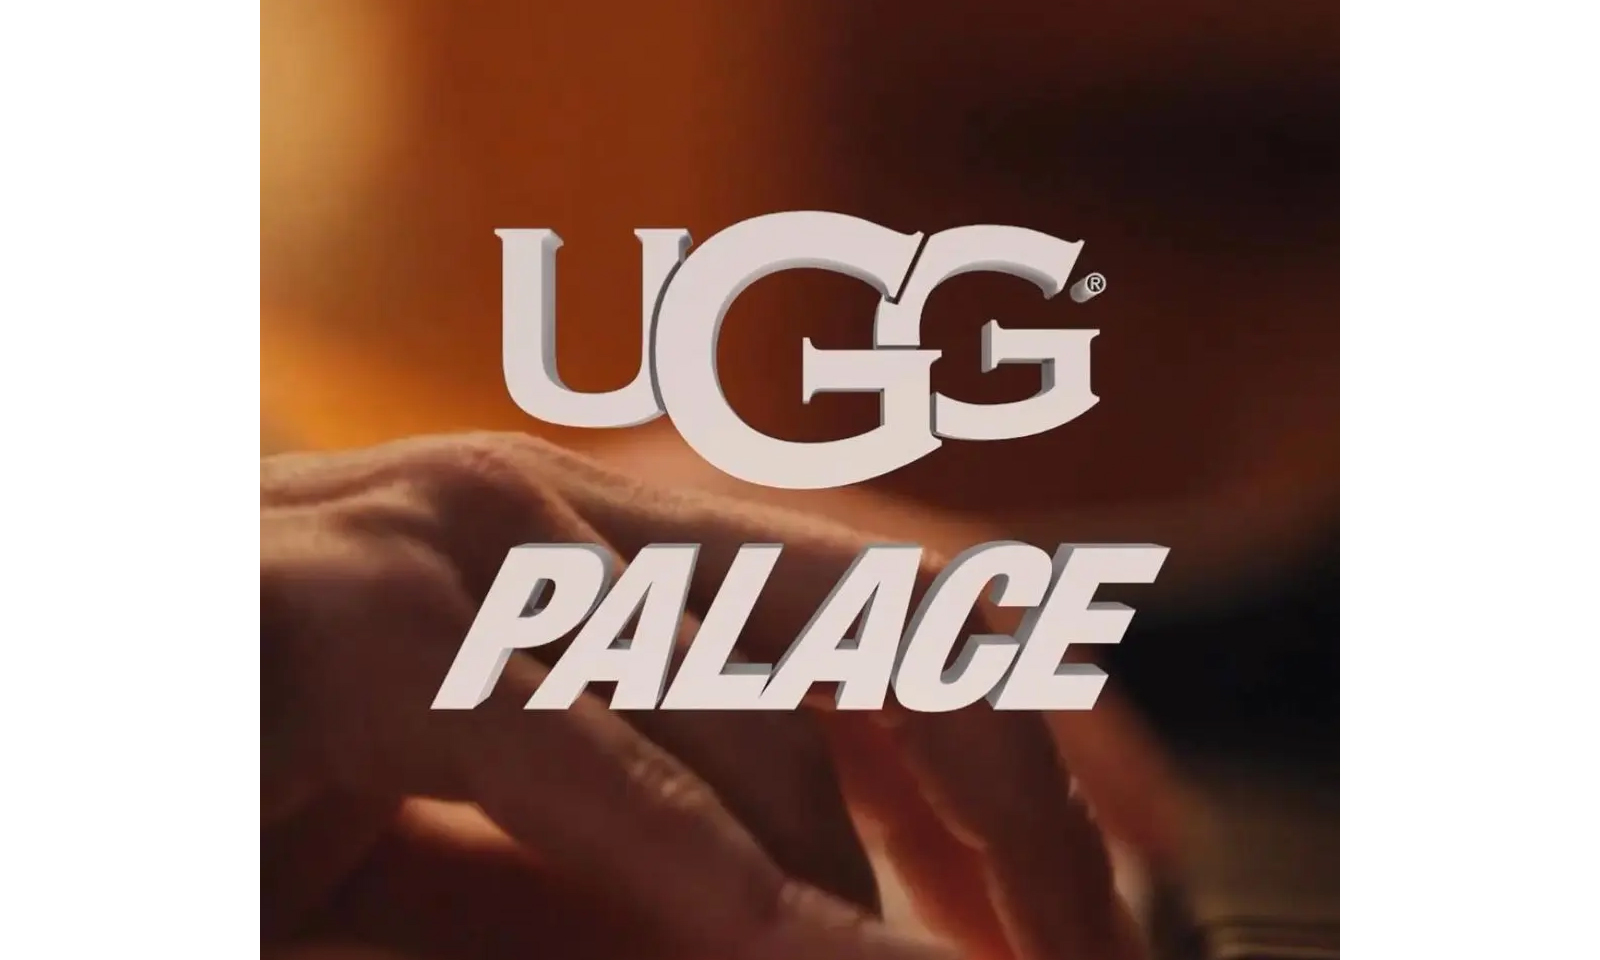 UGG x PALACE 合作系列即将再度来袭